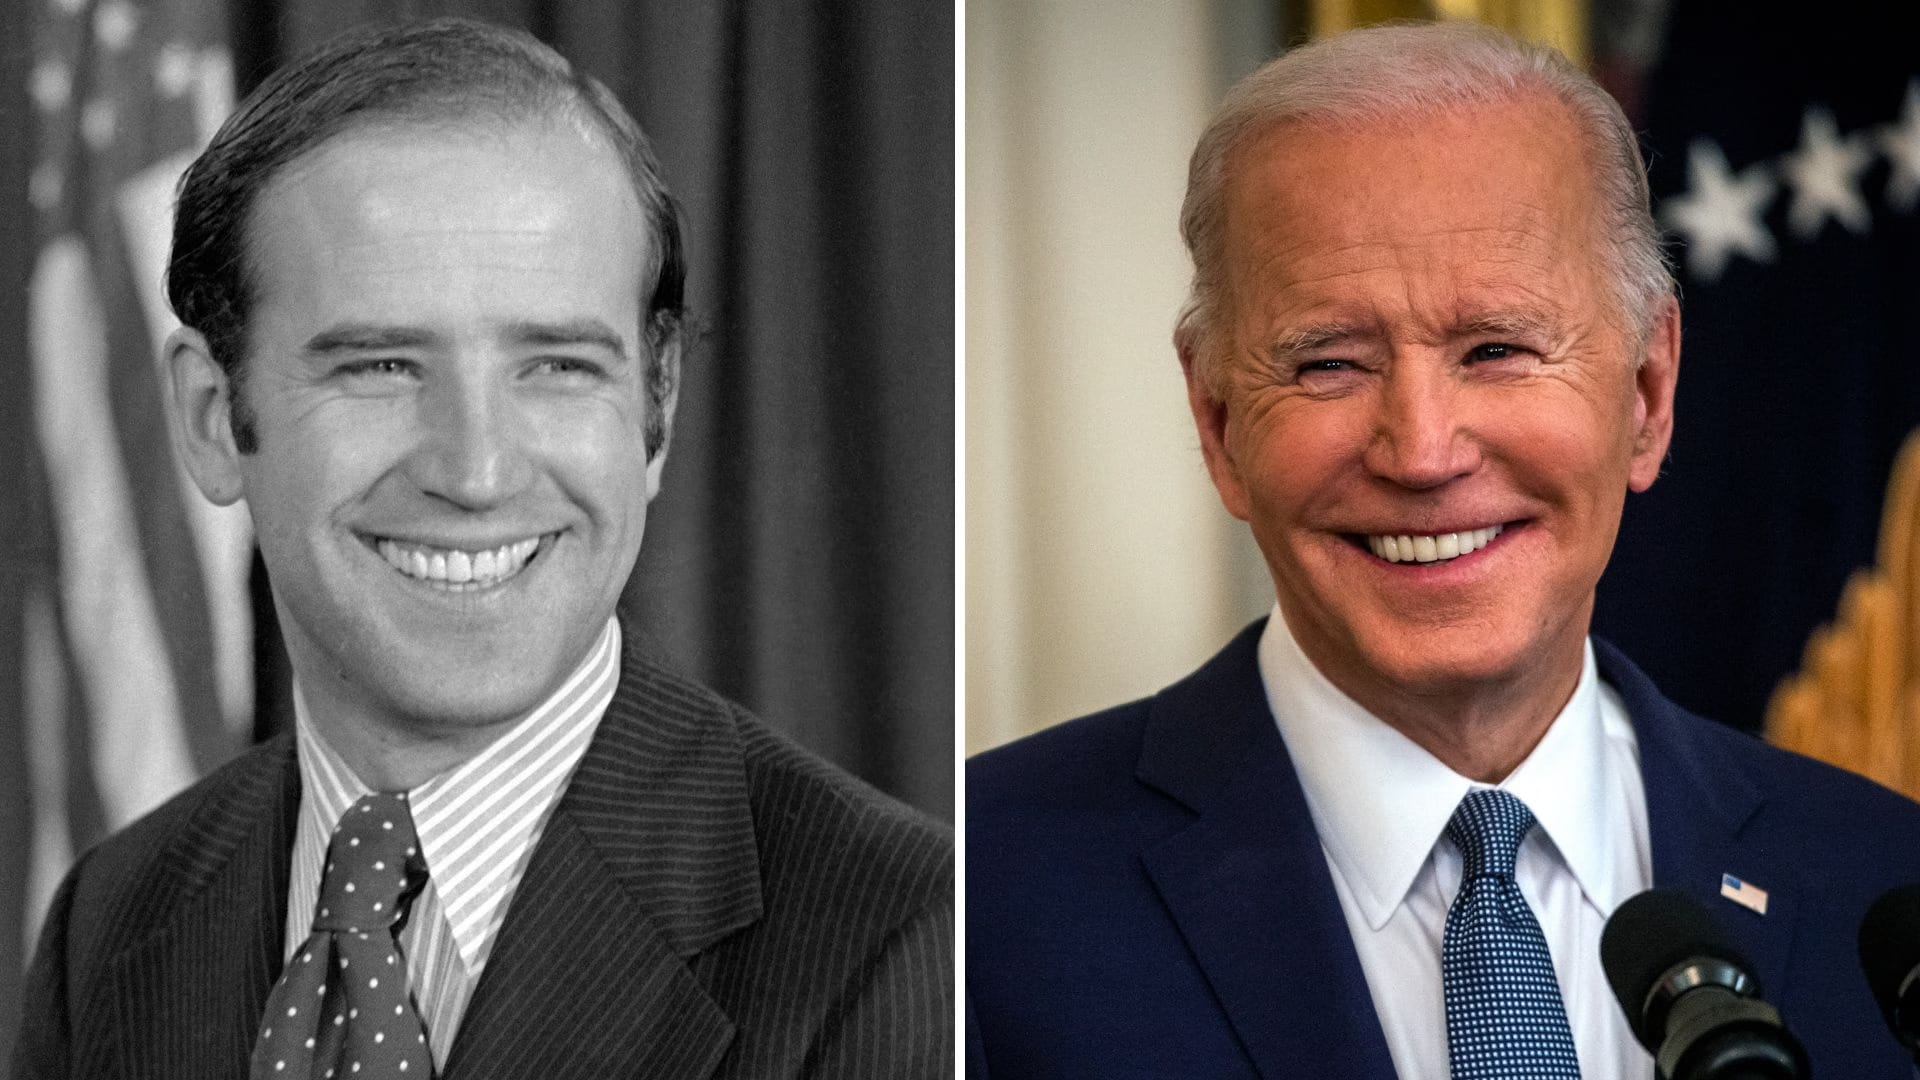 Debate Over President Biden's Age Heats Up as He Celebrates 81st Birthday